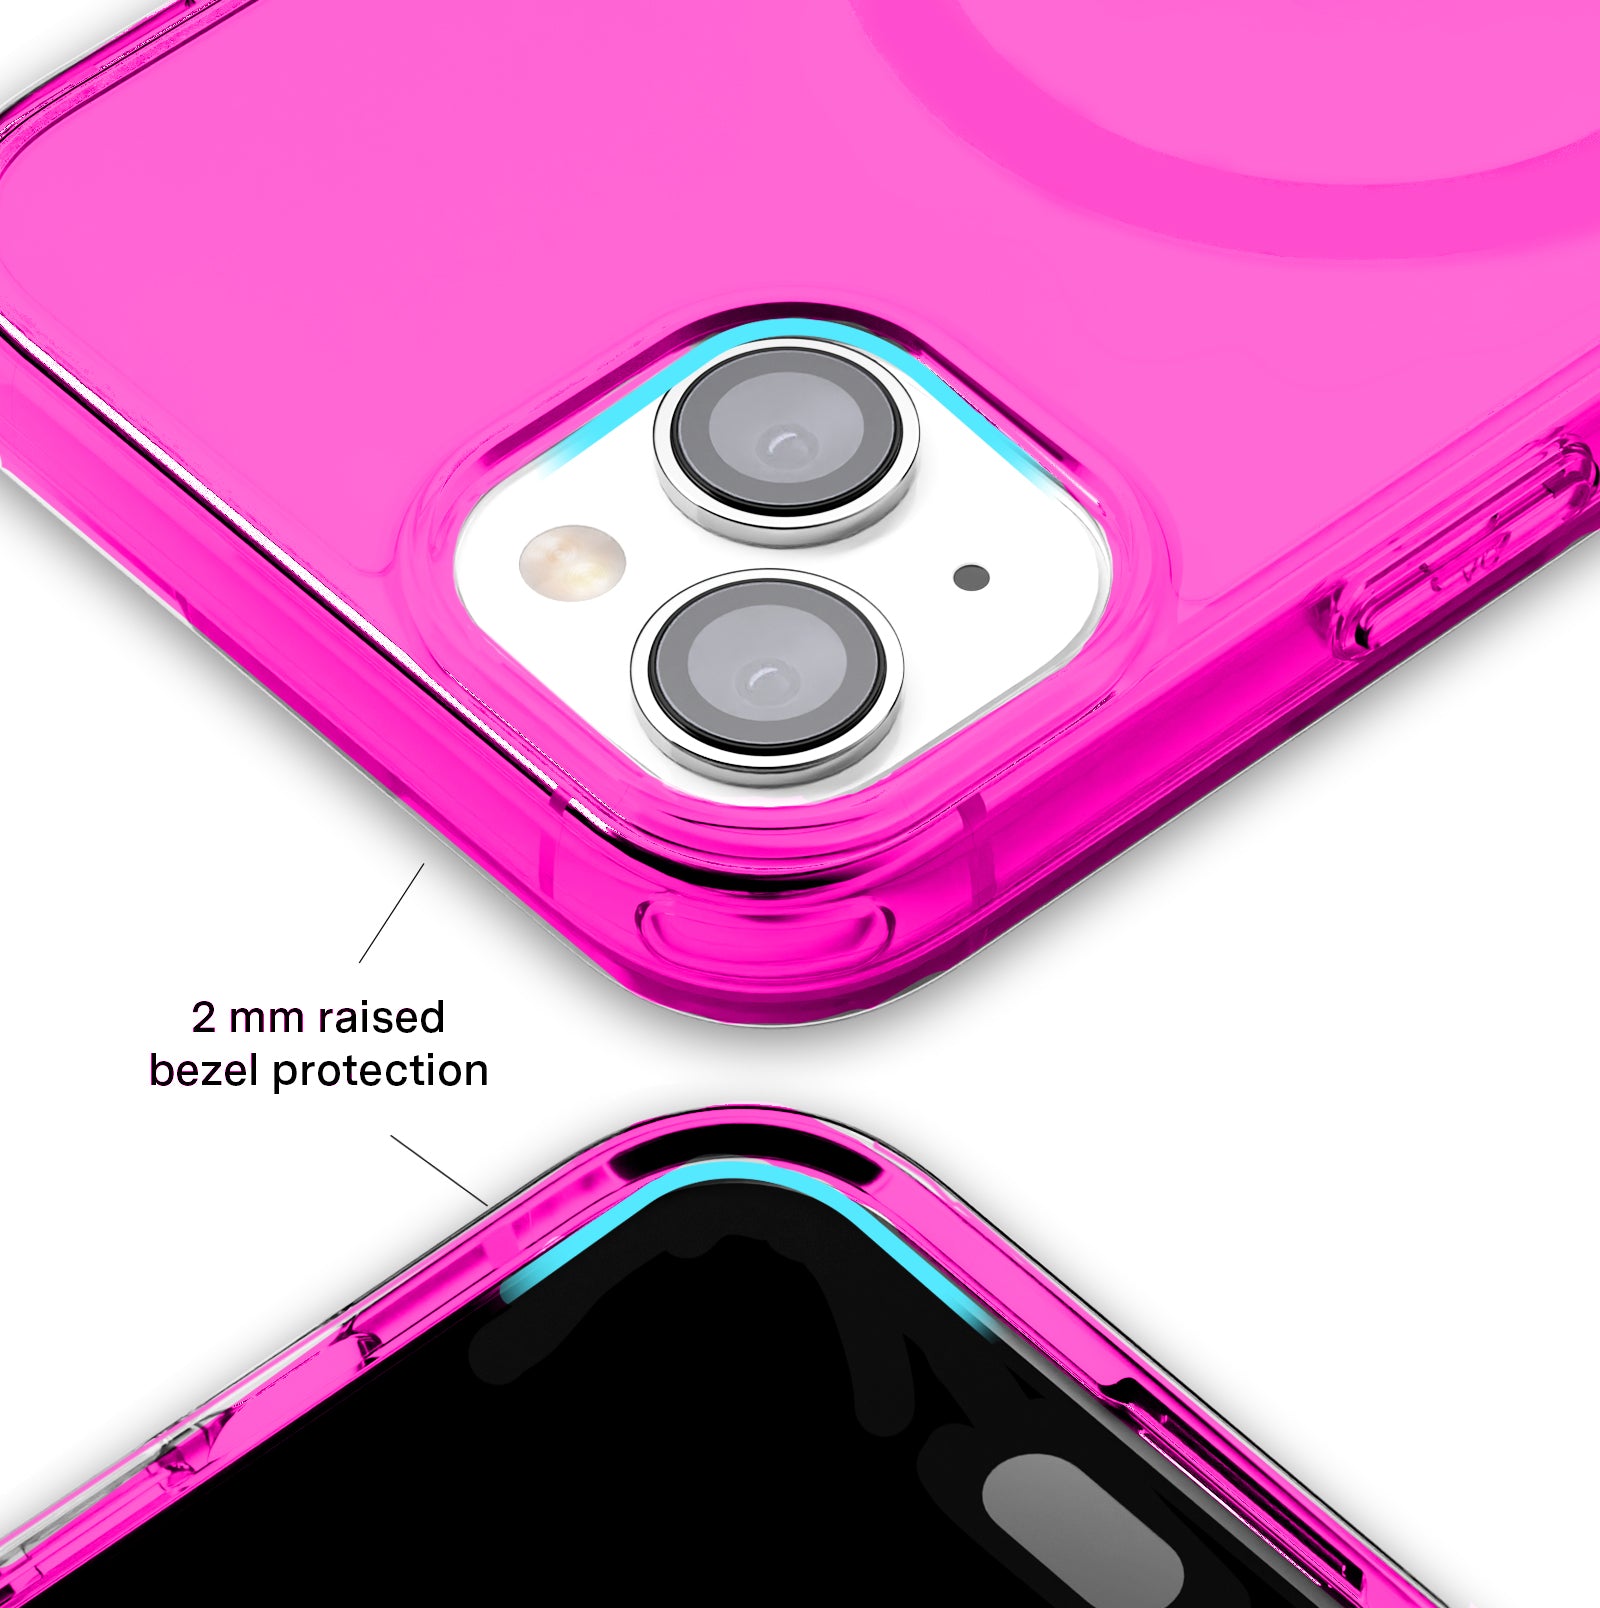 iPhone 11 Pro Case 